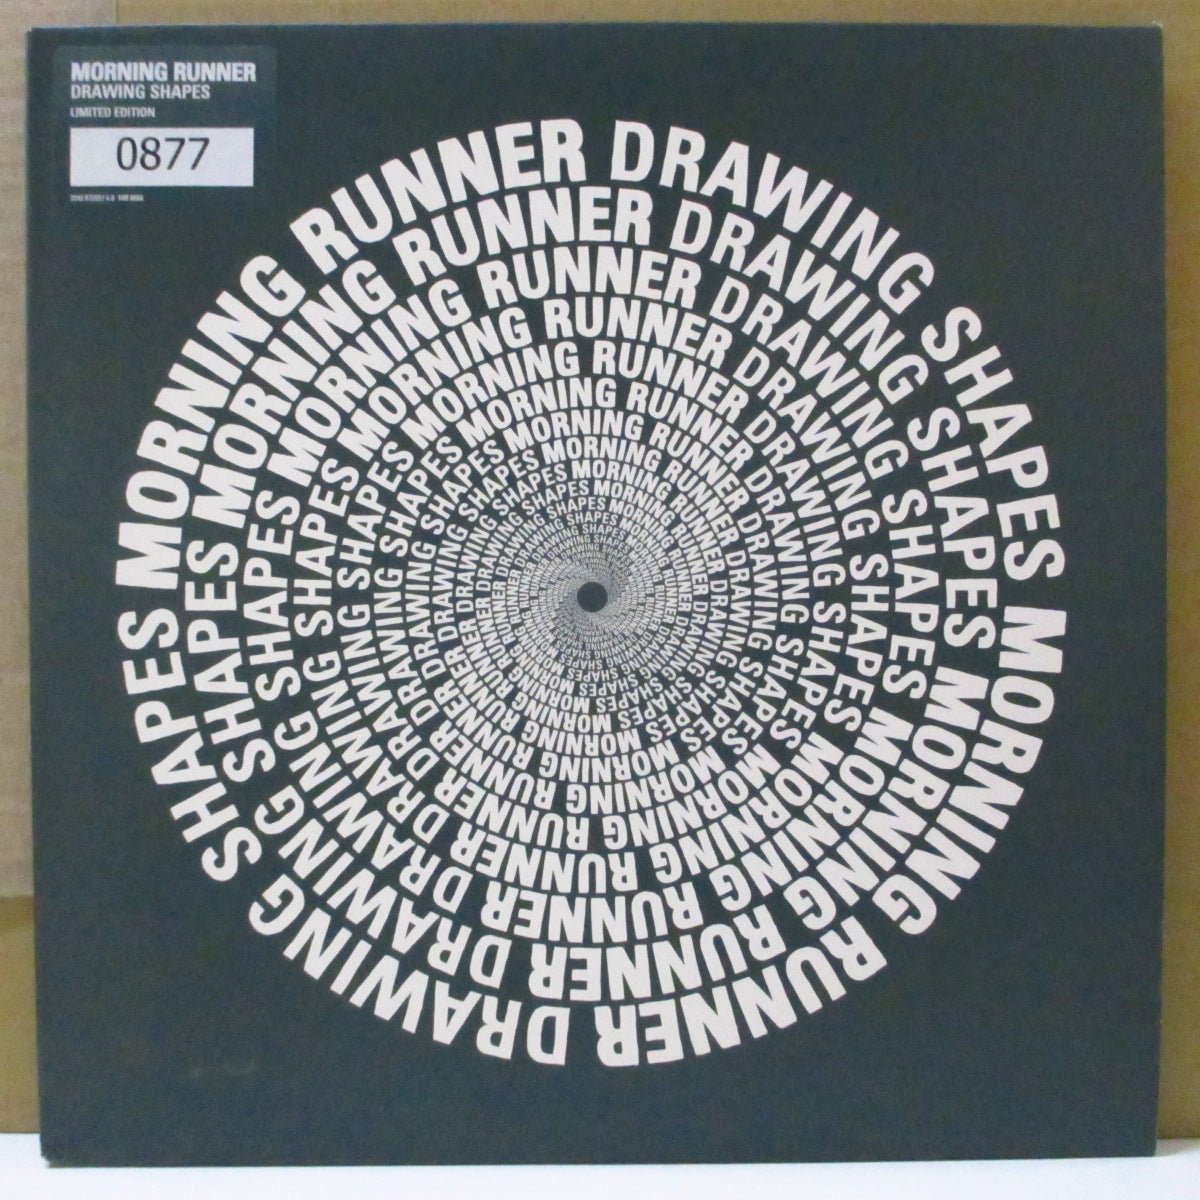 MORNING RUNNER (モーニング・ランナー) - Drawing Shapes (UK Limited